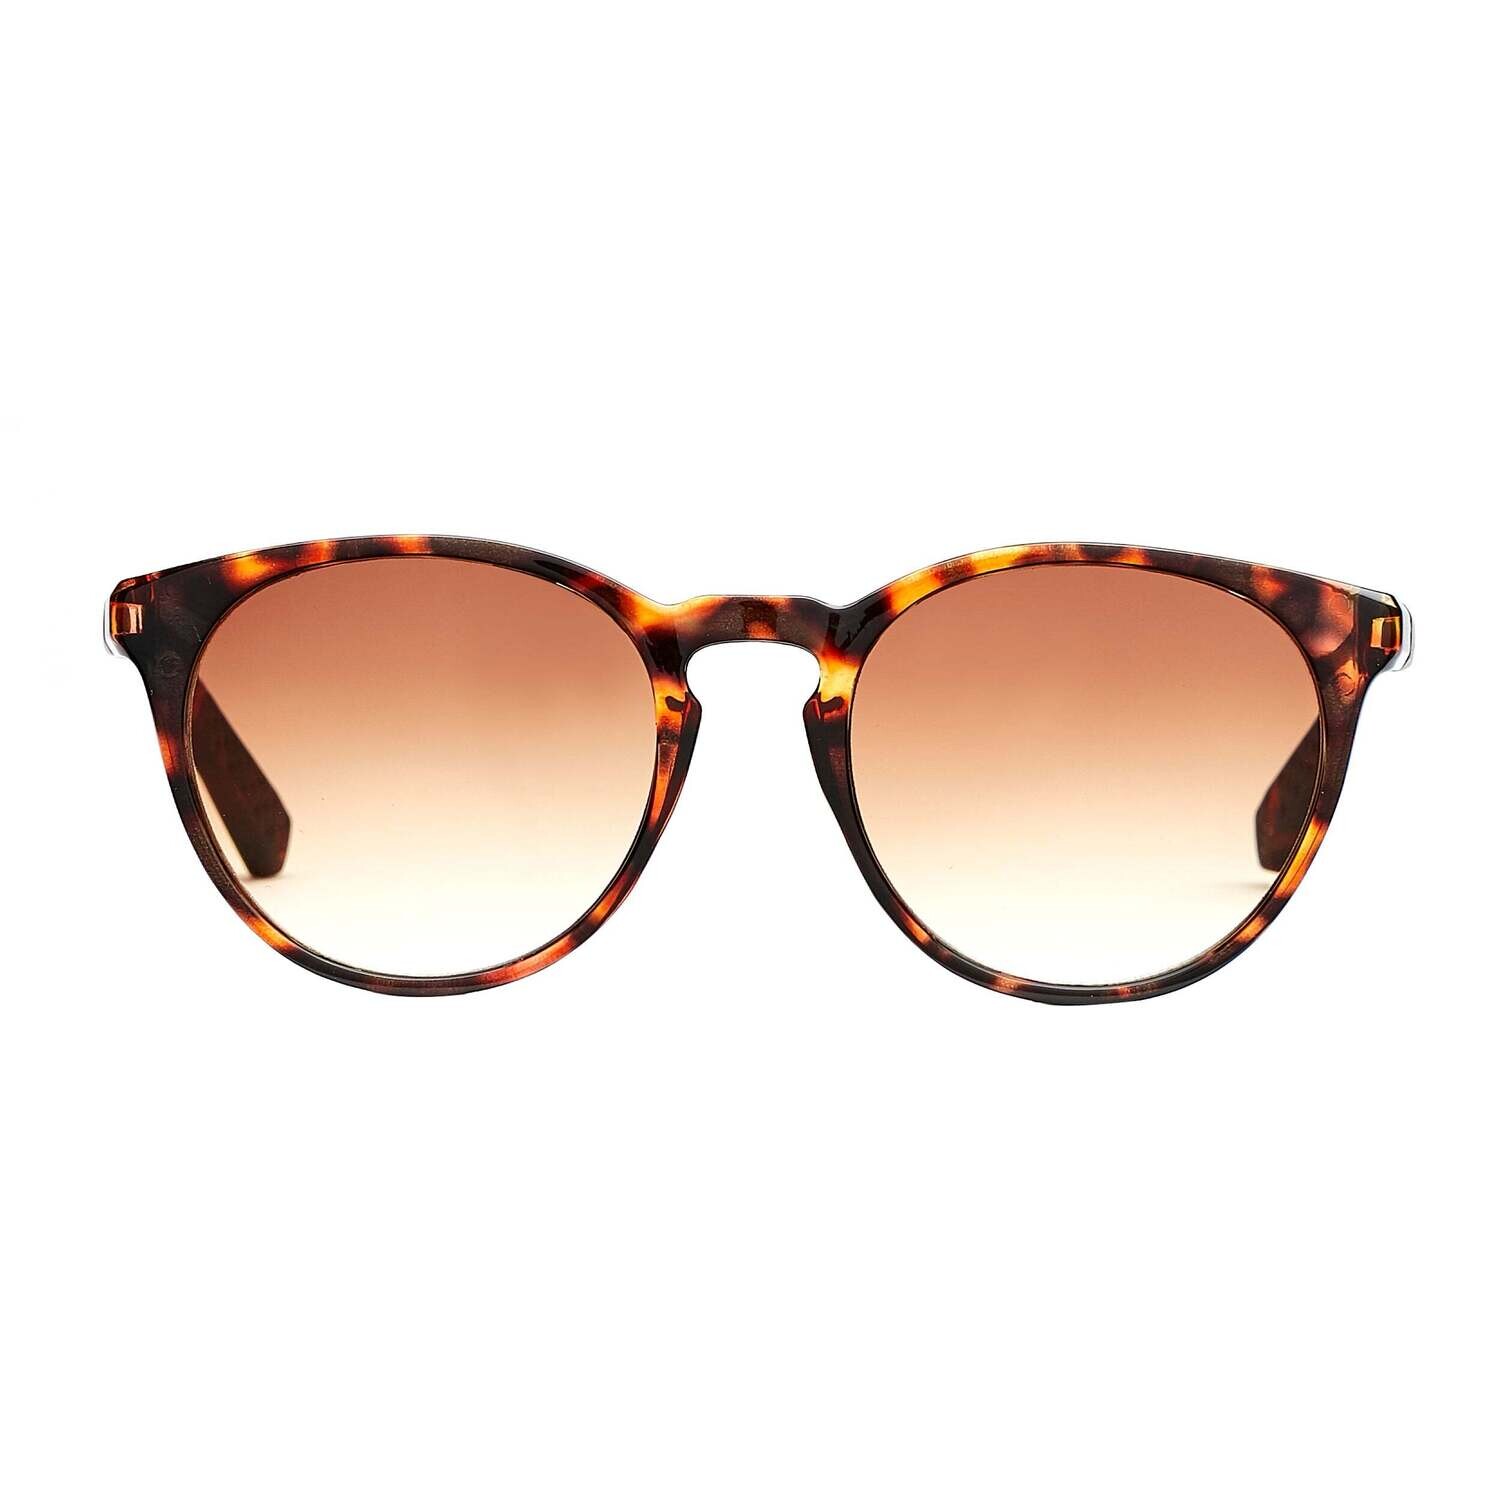 Слънчеви очила "Torino Brown"
Hart&Holm